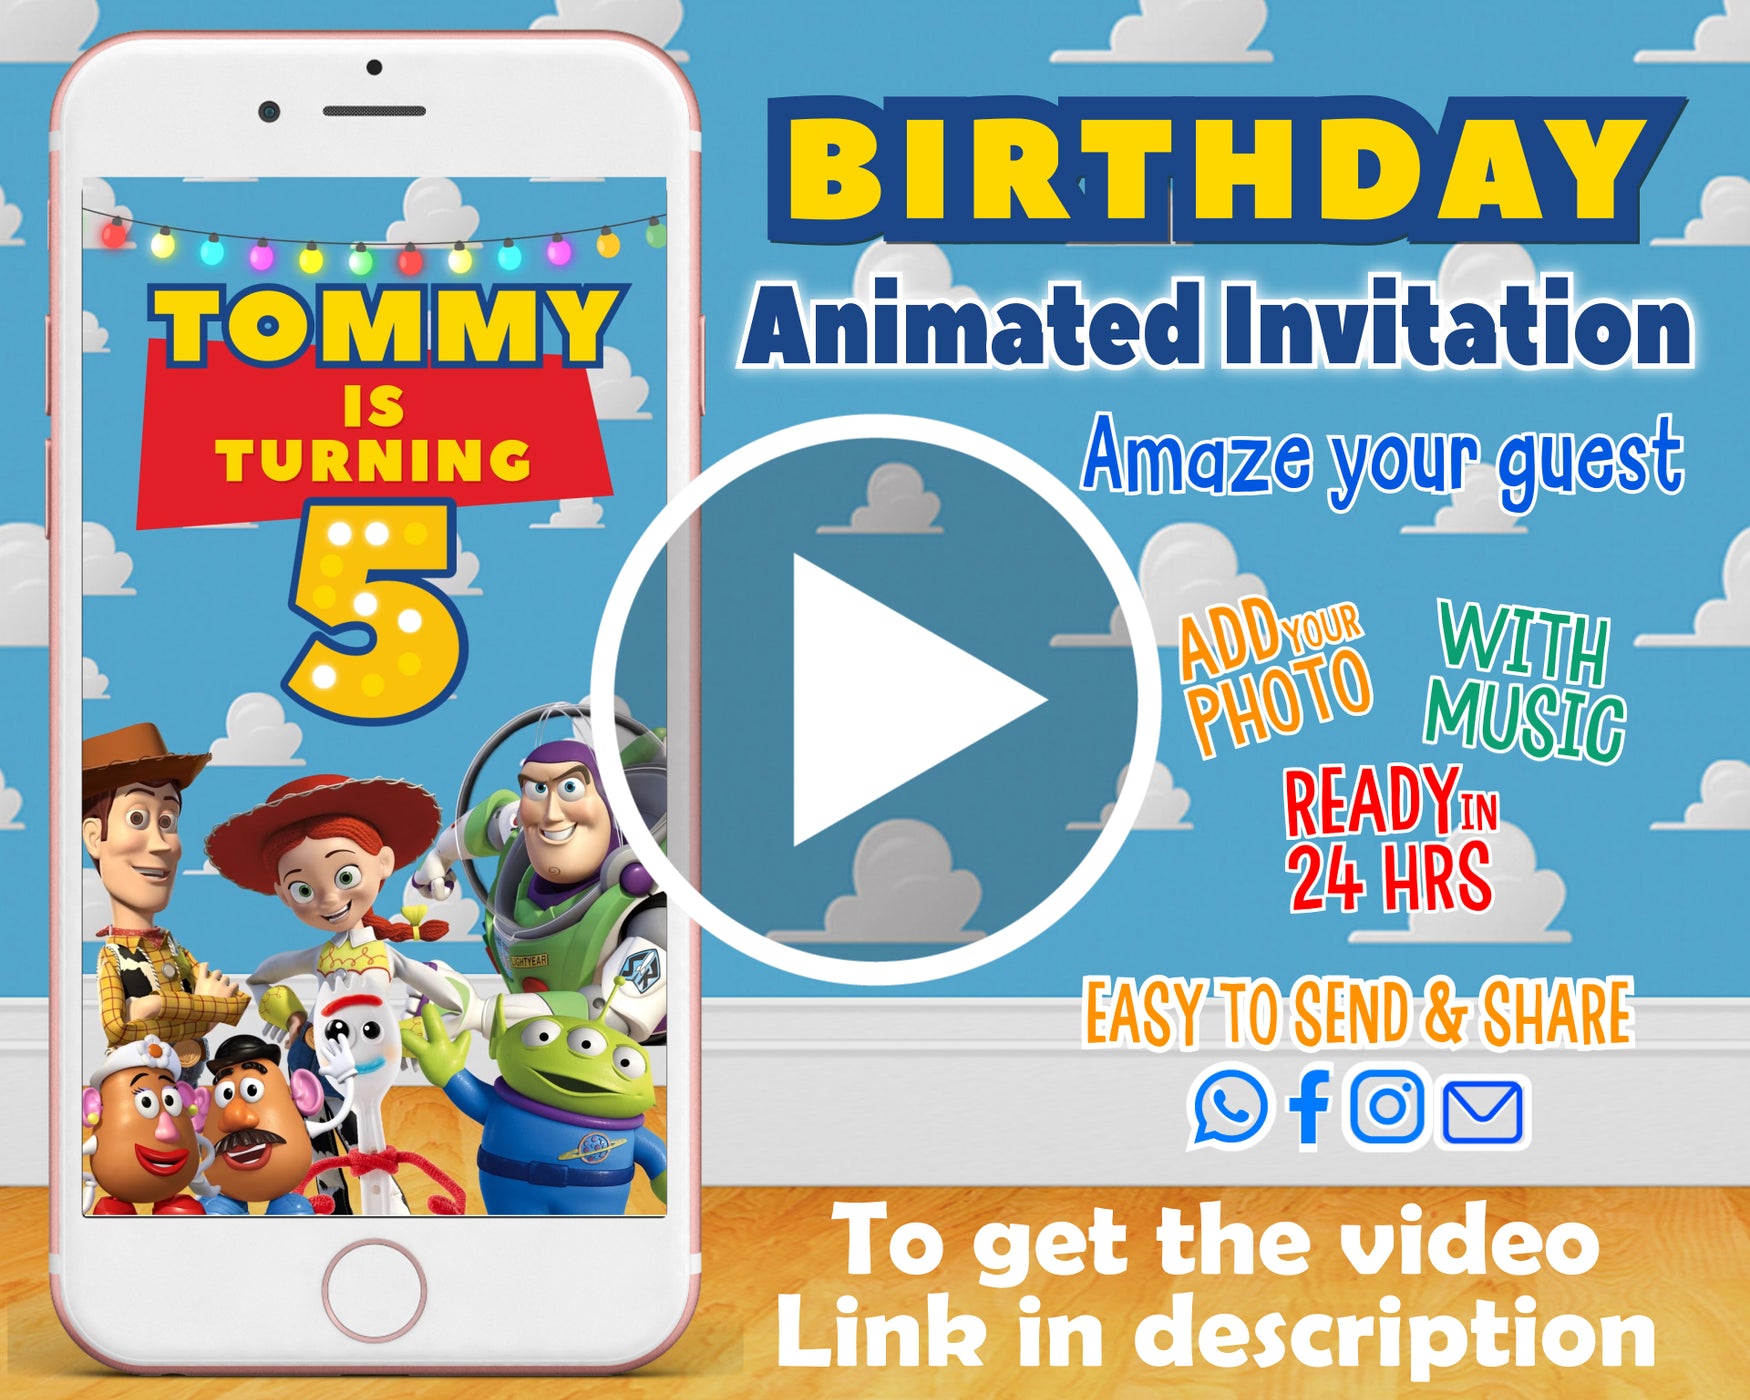 Toy Story Video Invitation | Toy Story Birthday Party Animated Invitation